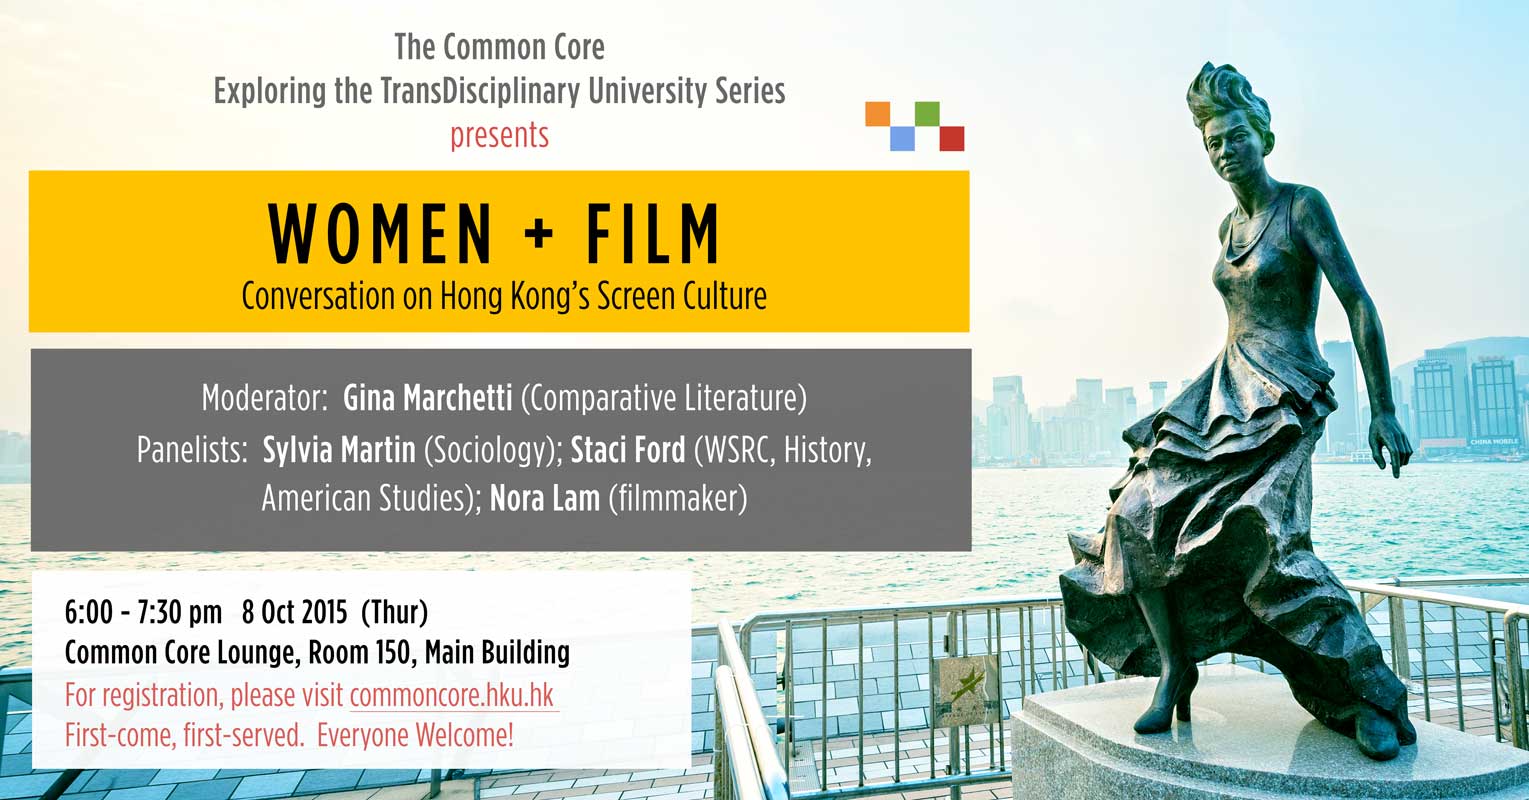  Common Core: Women+Film - Exploring the TransDisicplinary University 